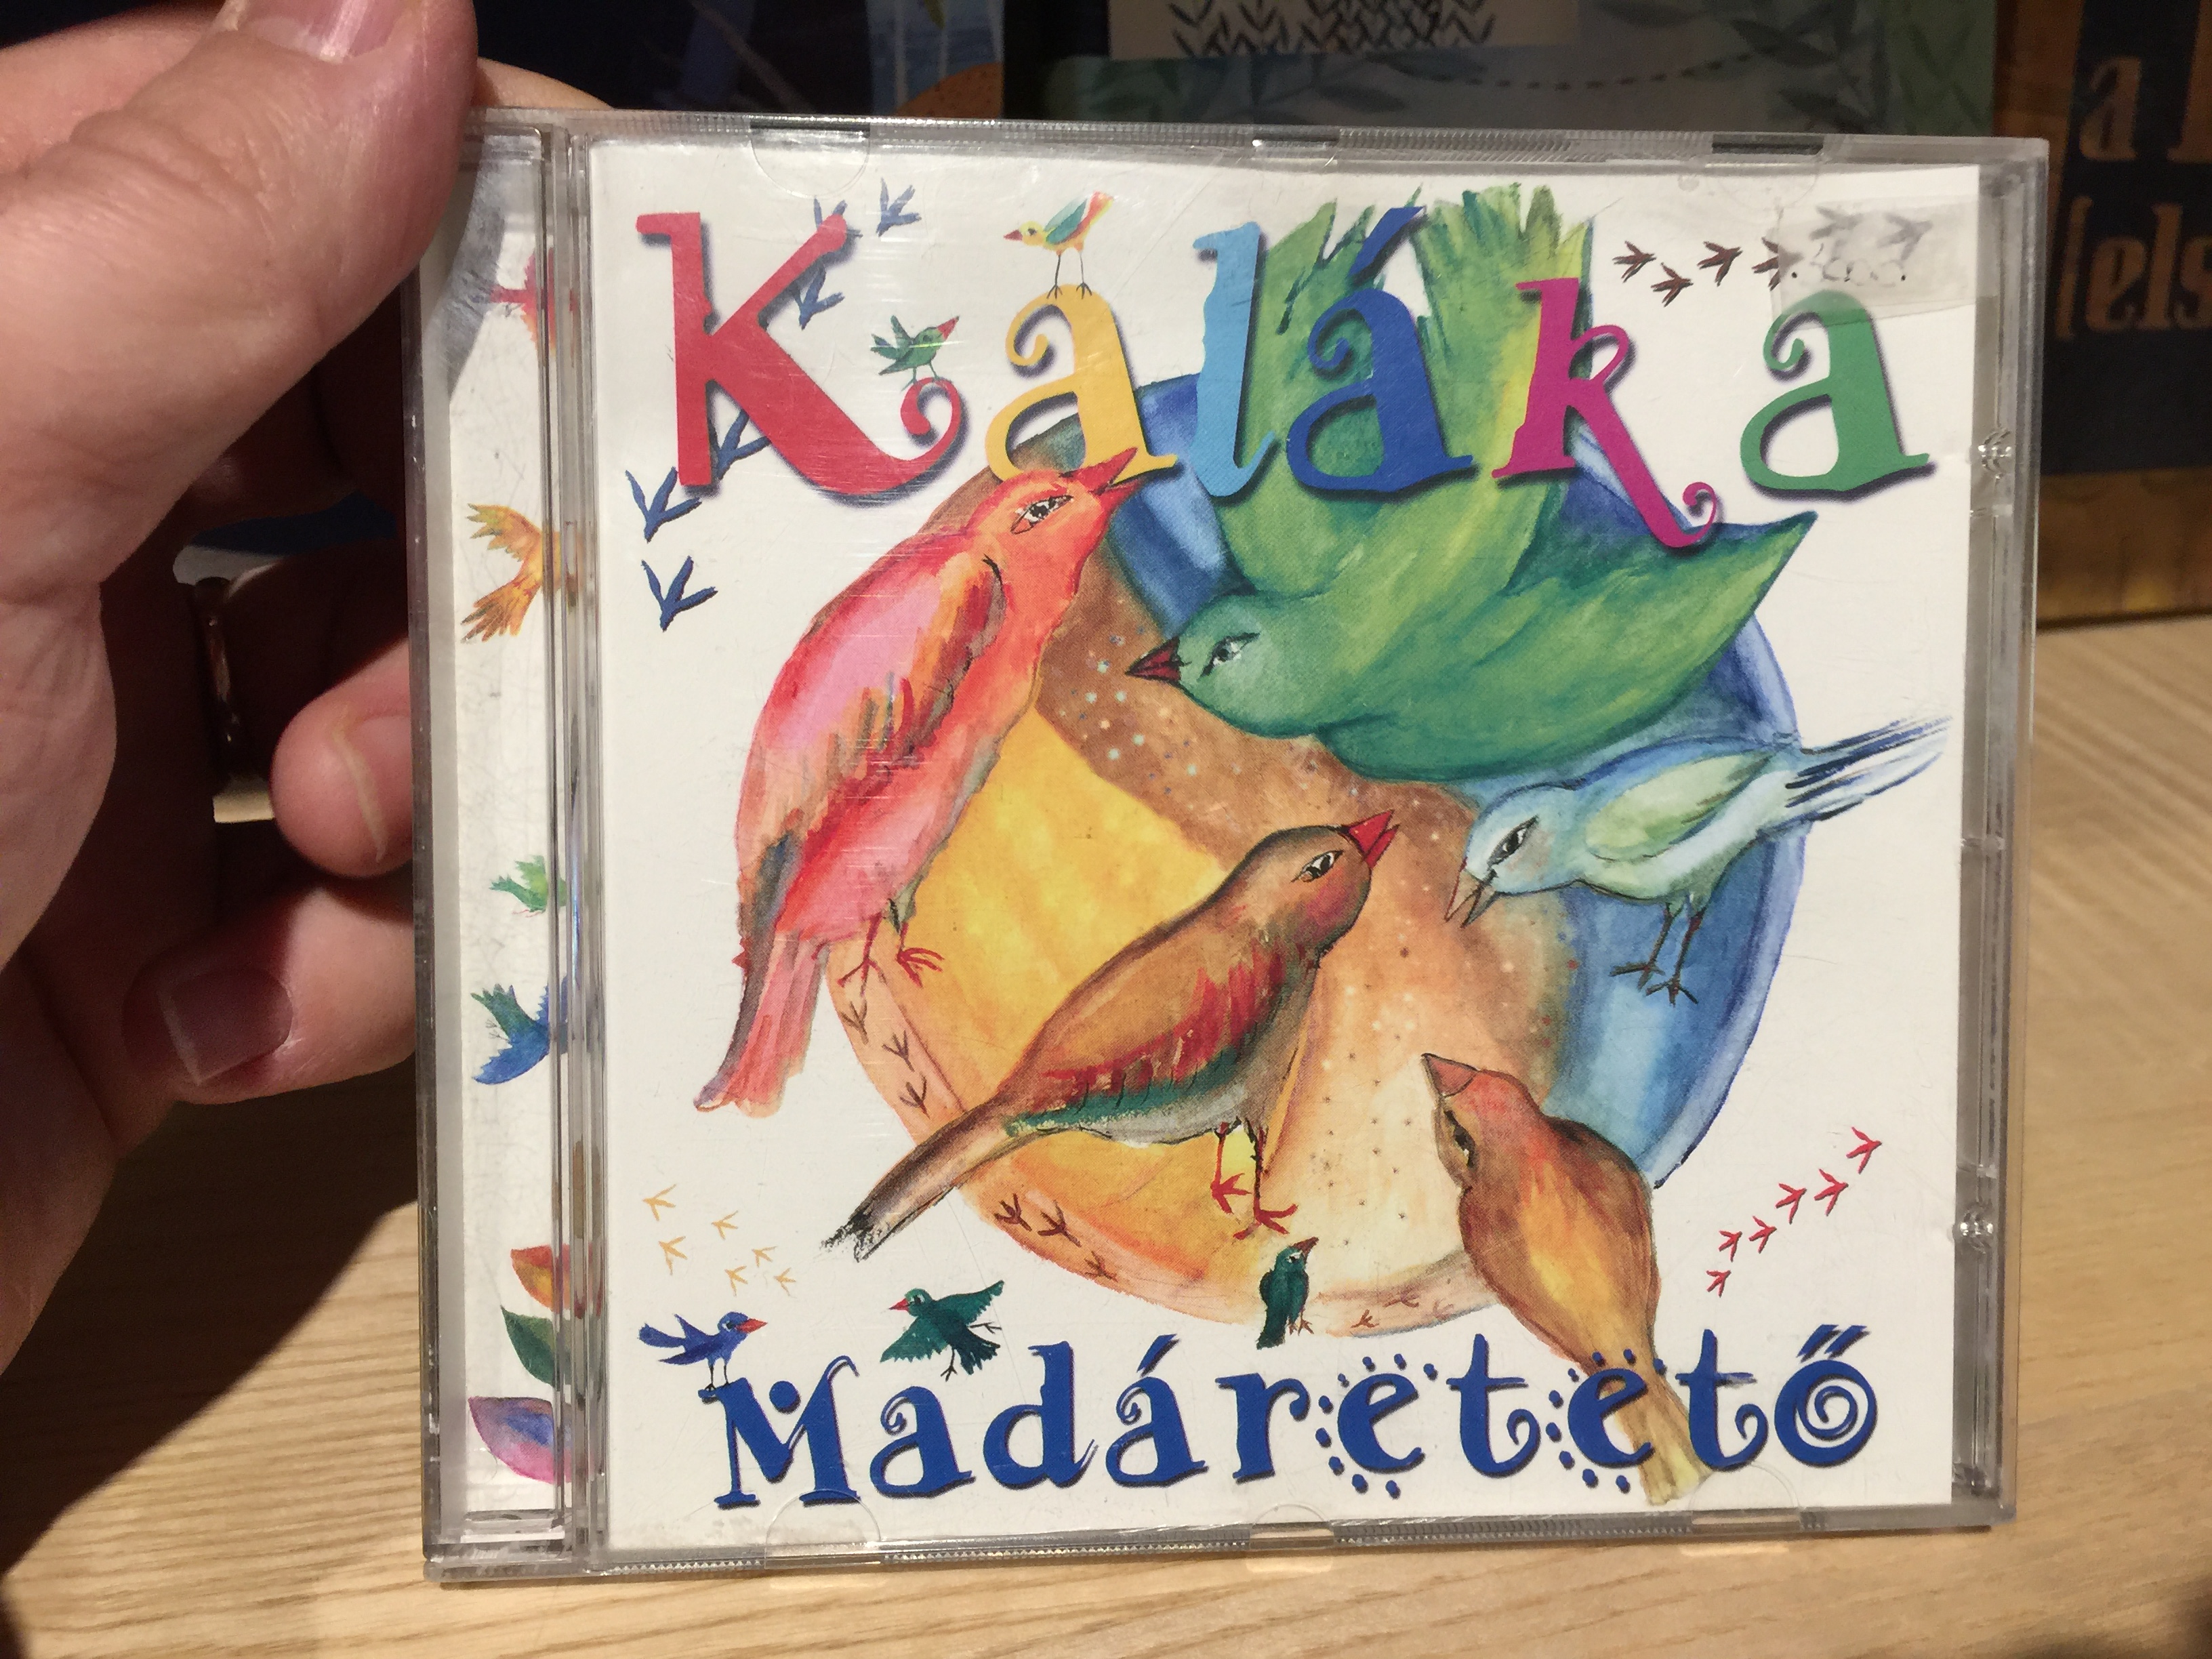 kal-ka-mad-retet-gryllus-audio-cd-2006-gcd-056-1-.jpg